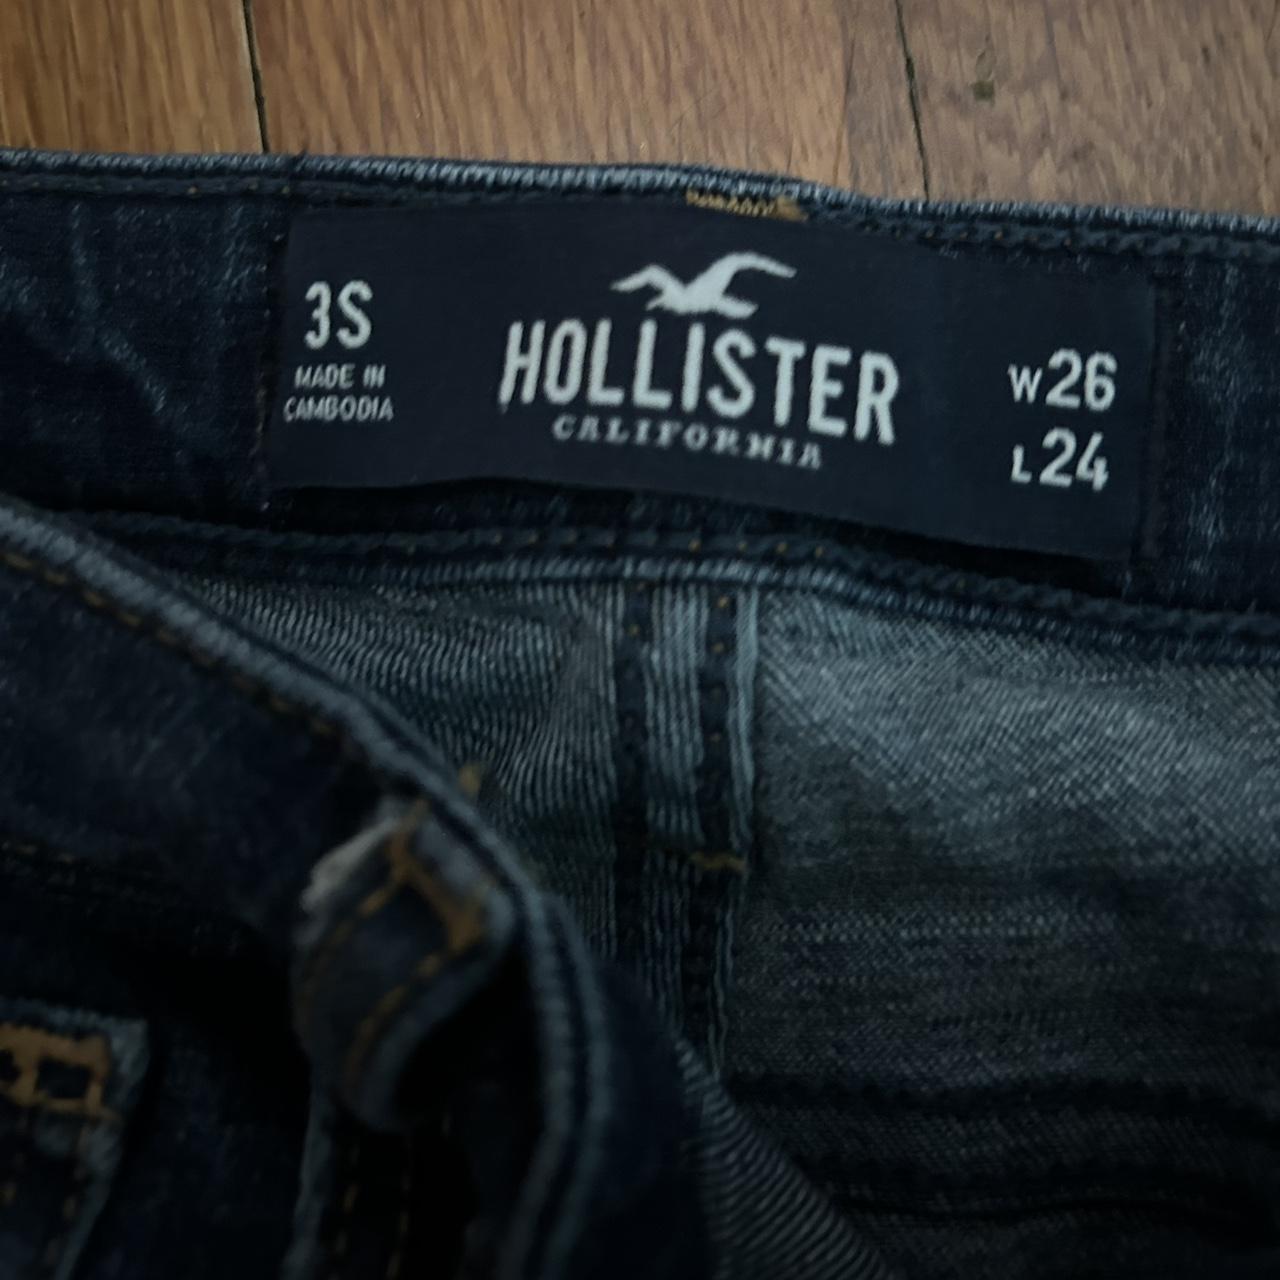 hollister jeans logo